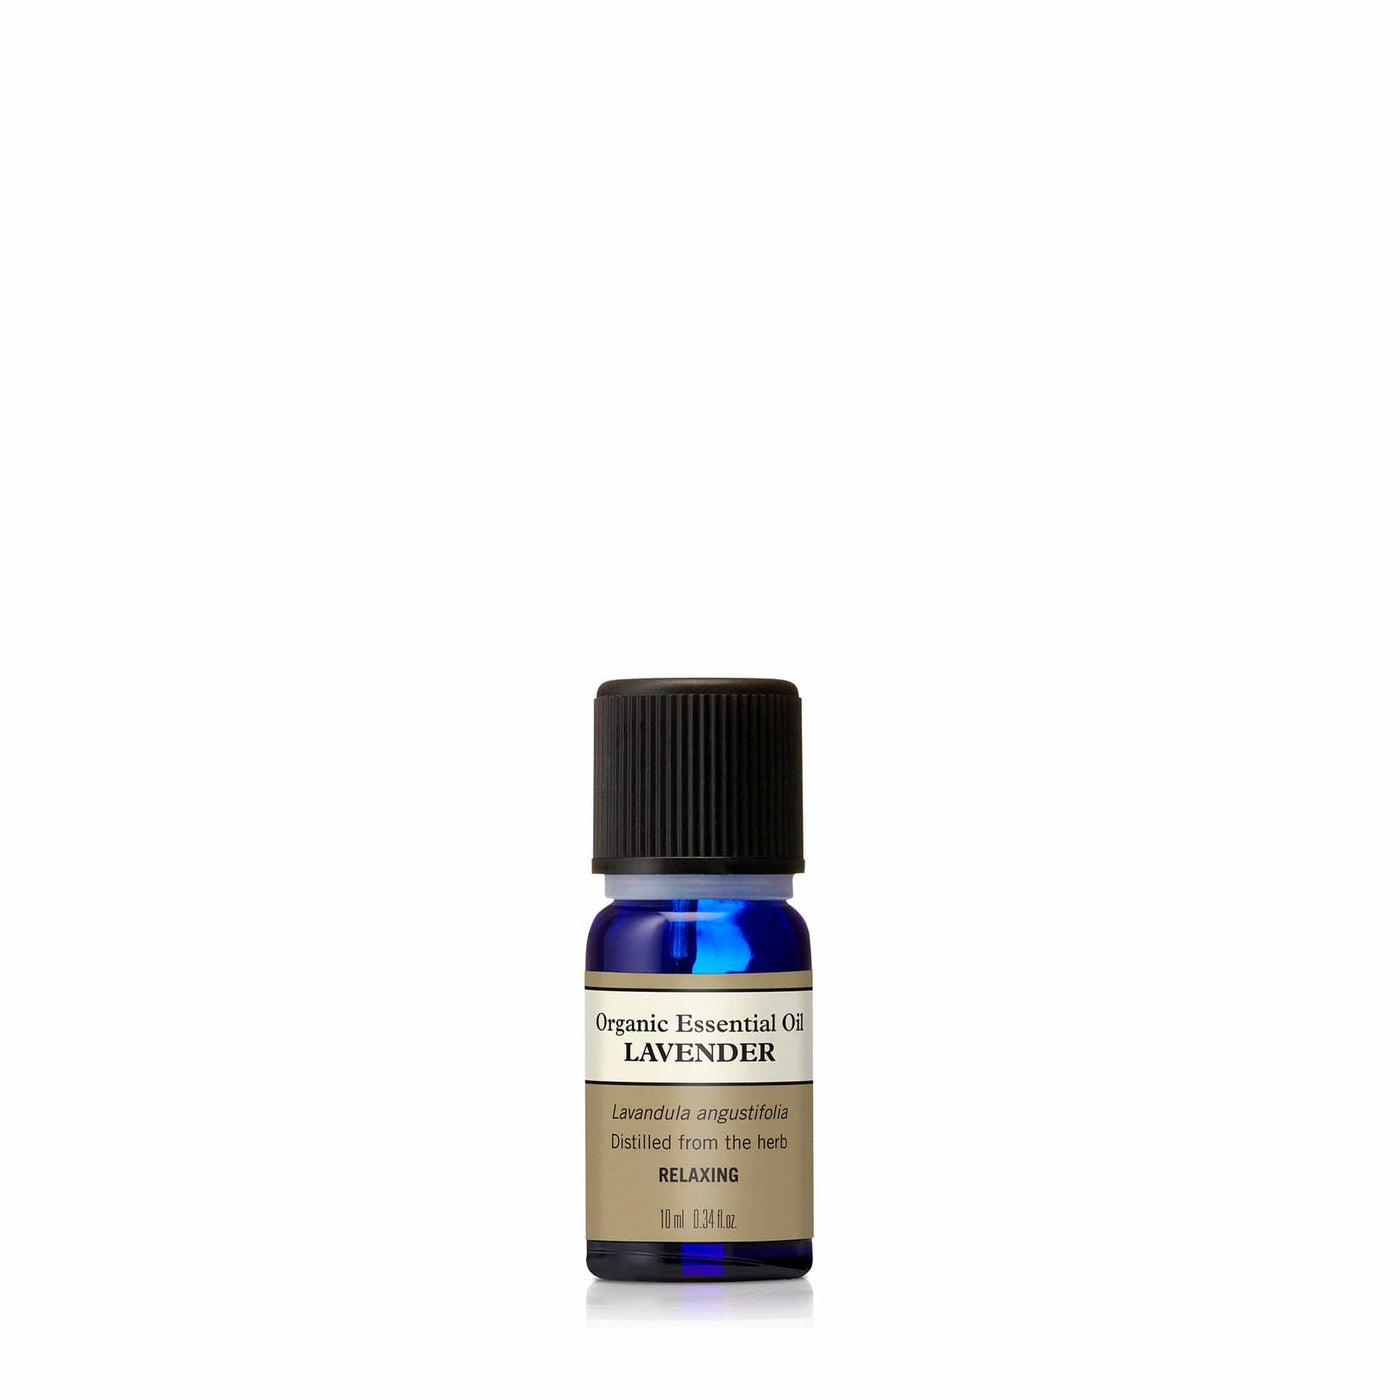 Neal's Yard Remedies Aromatherapy Lavender Organic Essential Oil 0.34 fl. oz